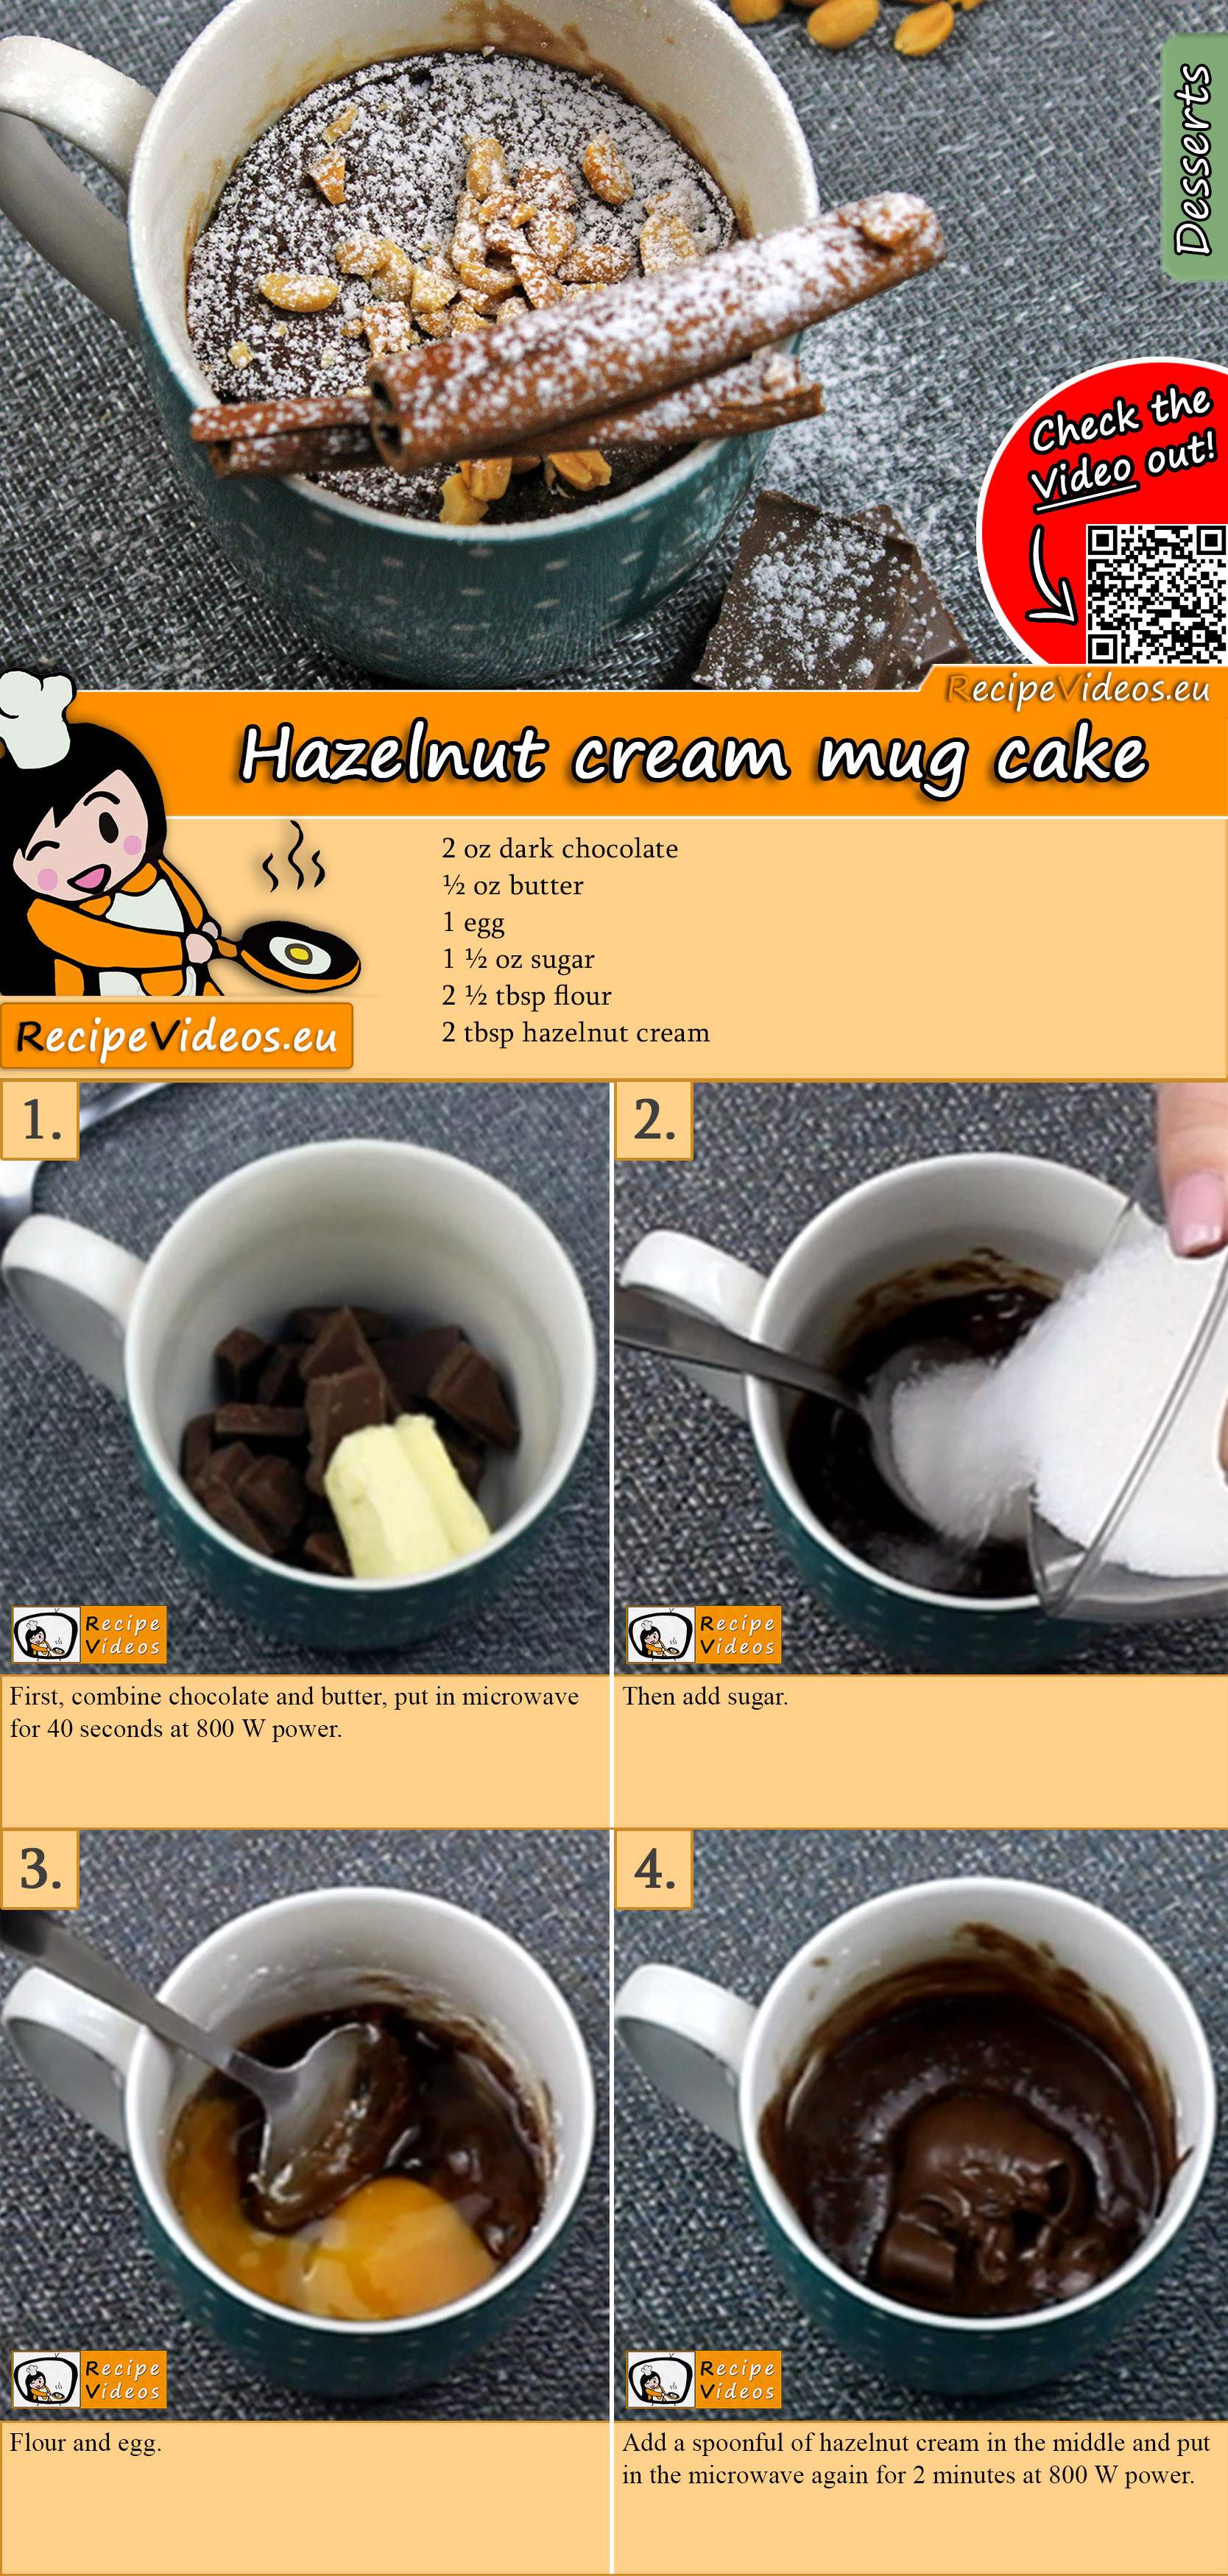 Hazelnut cream mug cake recipe with video